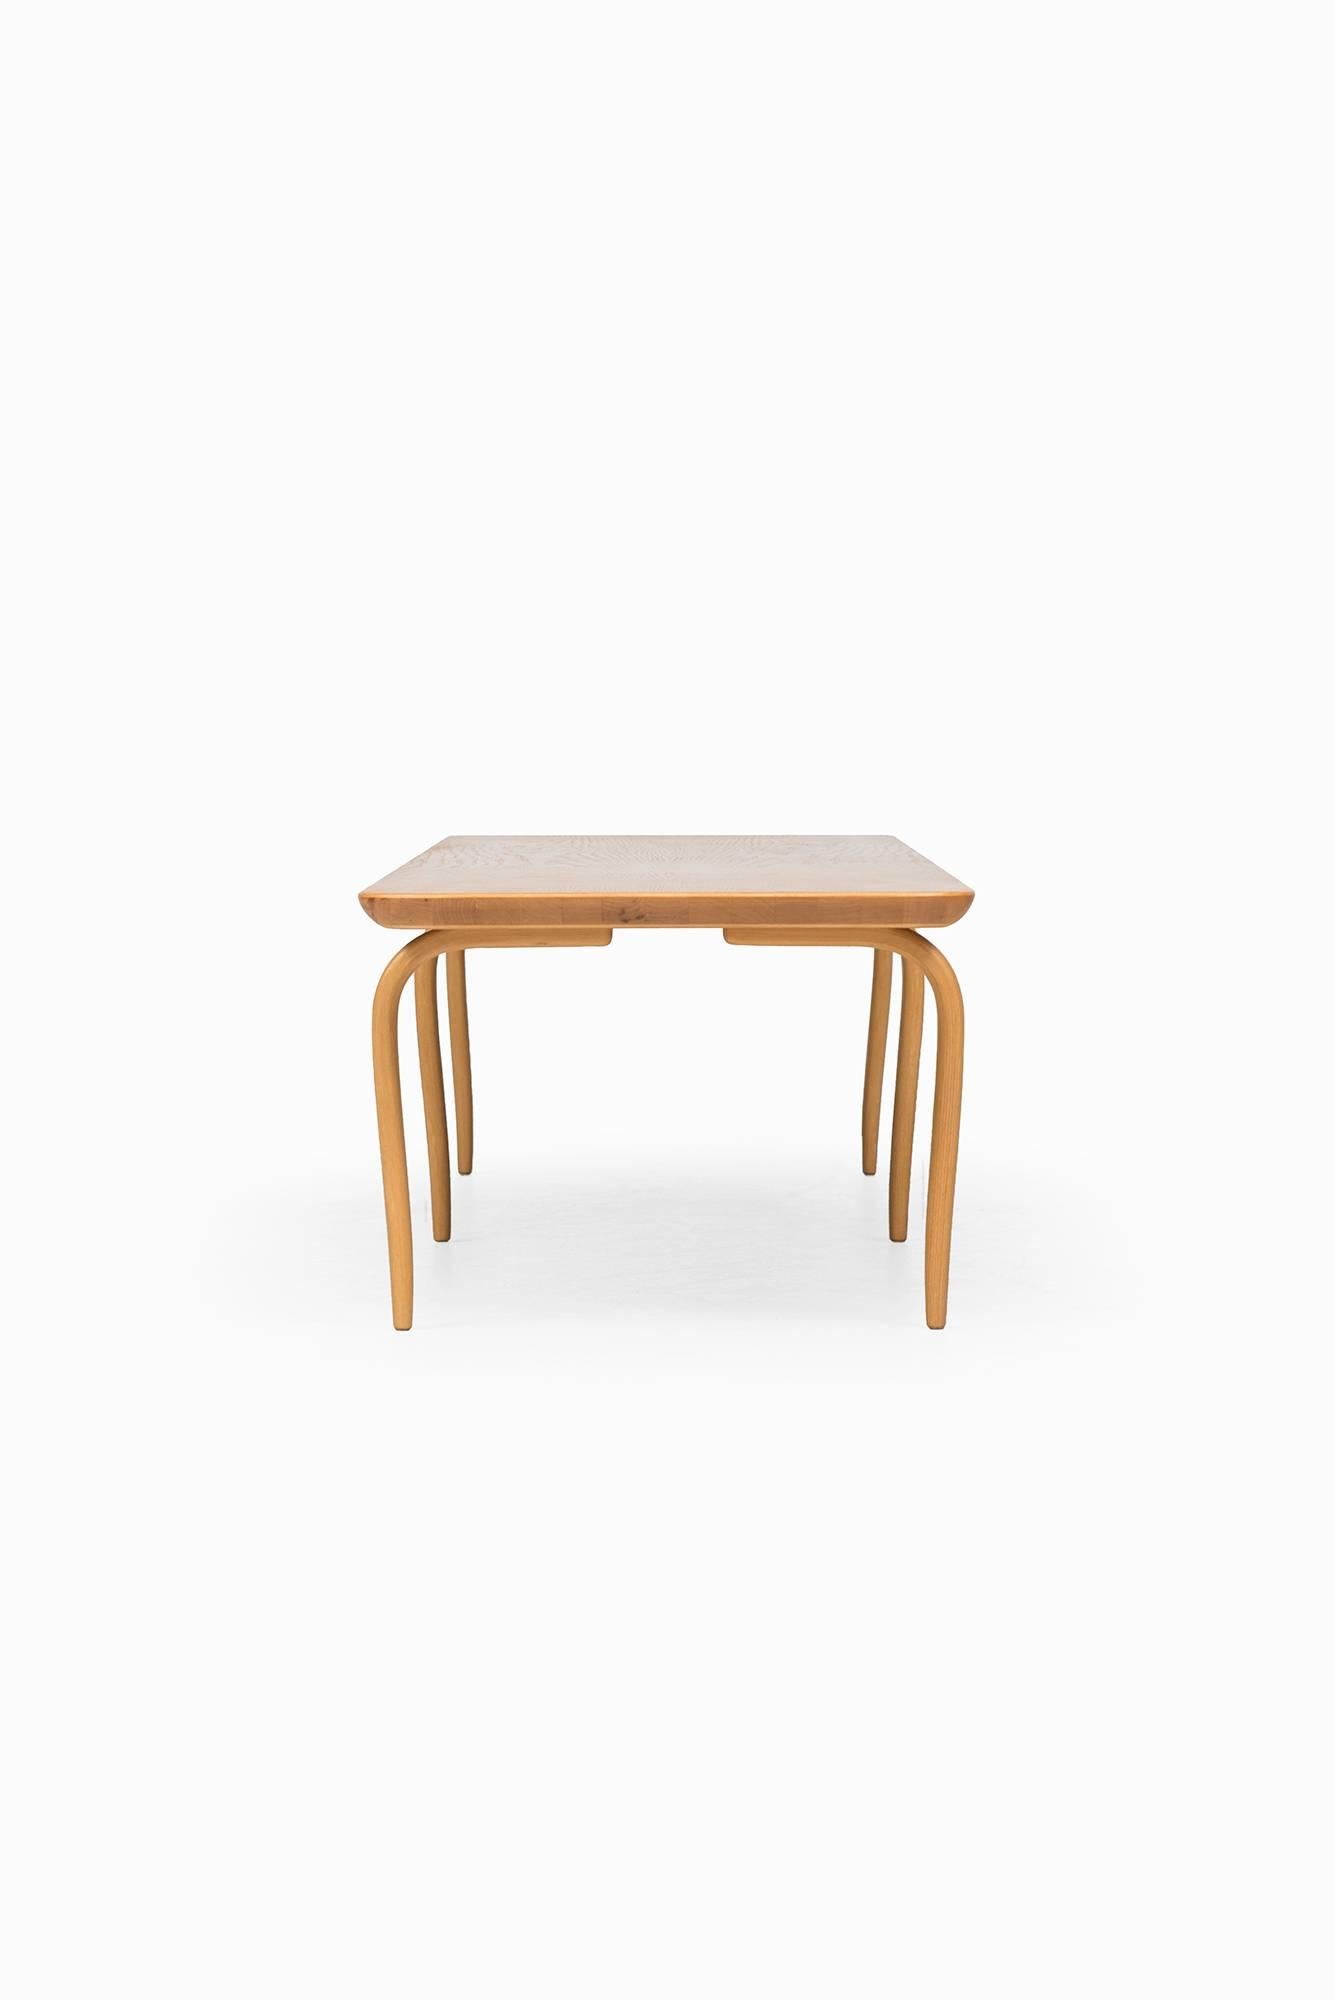 Scandinavian Modern Bruno Mathsson Low Bench or Side Table by Karl Mathsson in Sweden